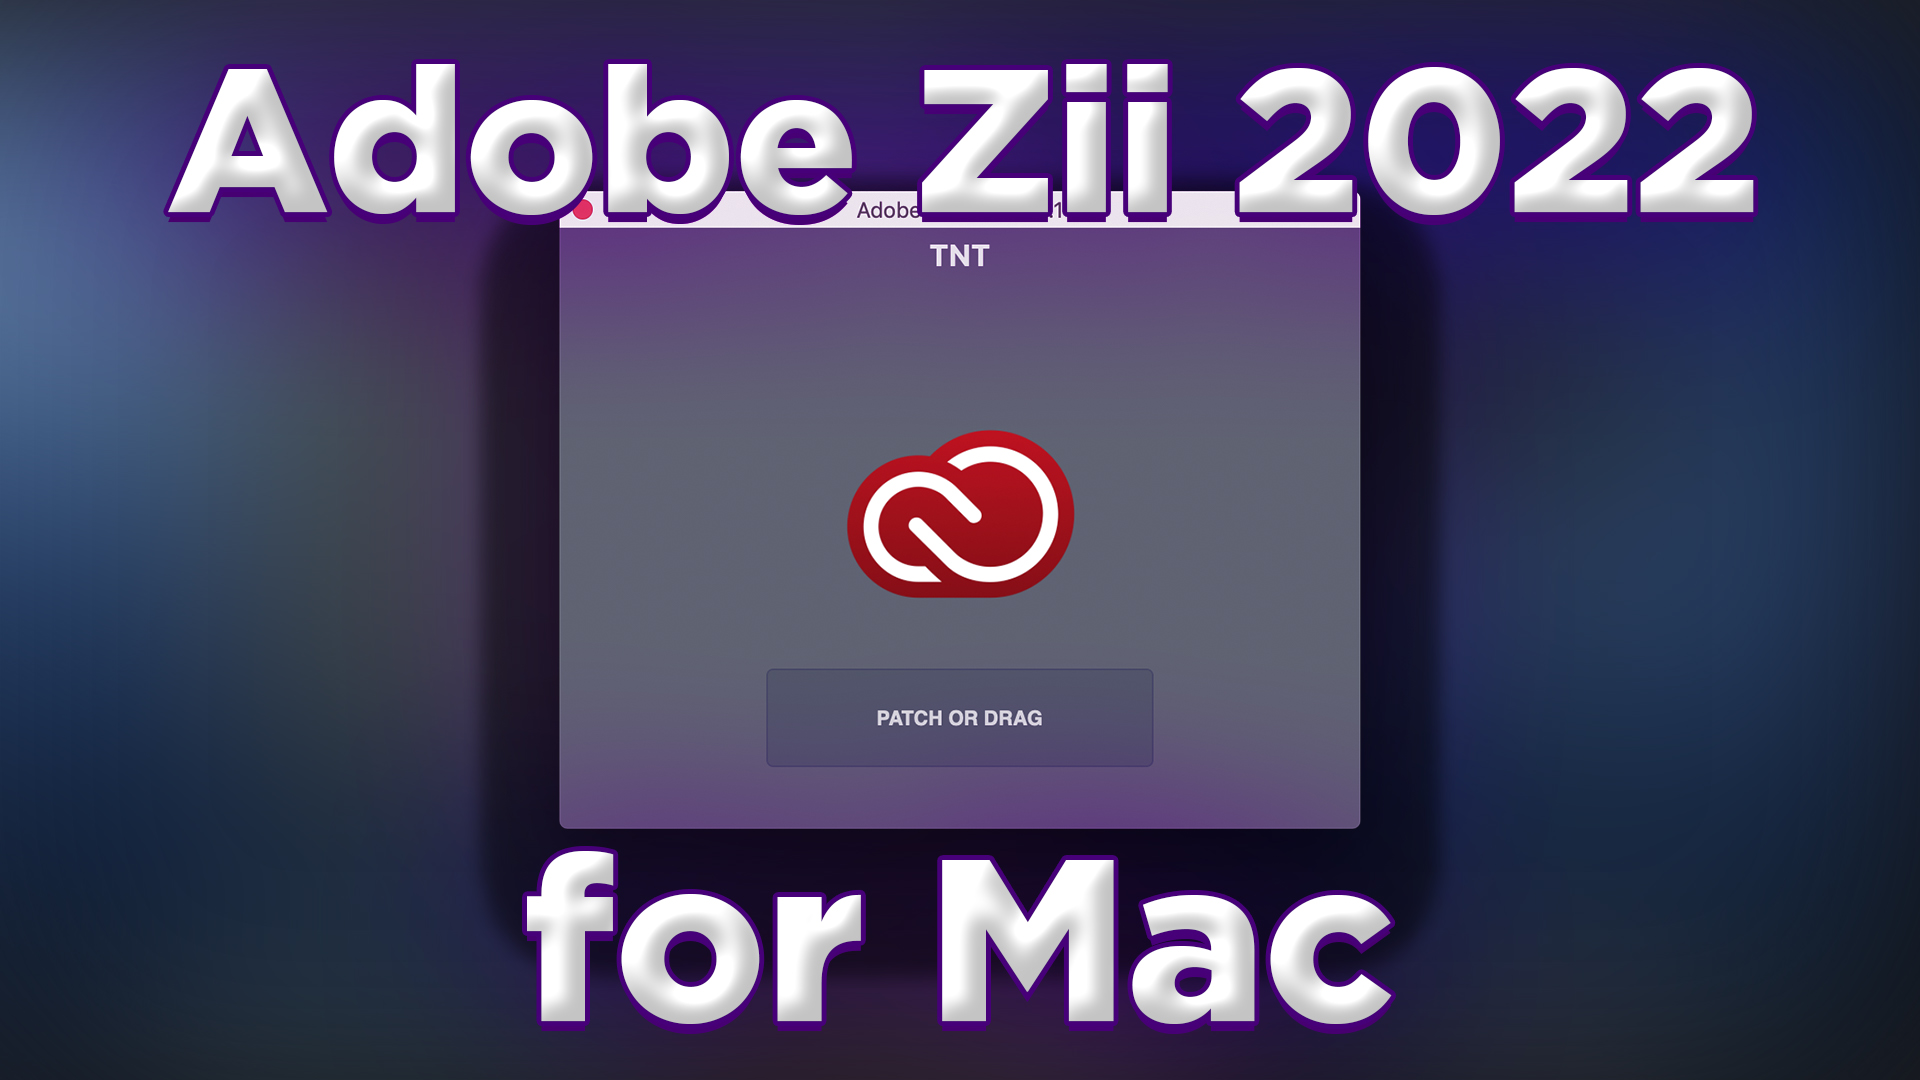 Adobe Zii 2022